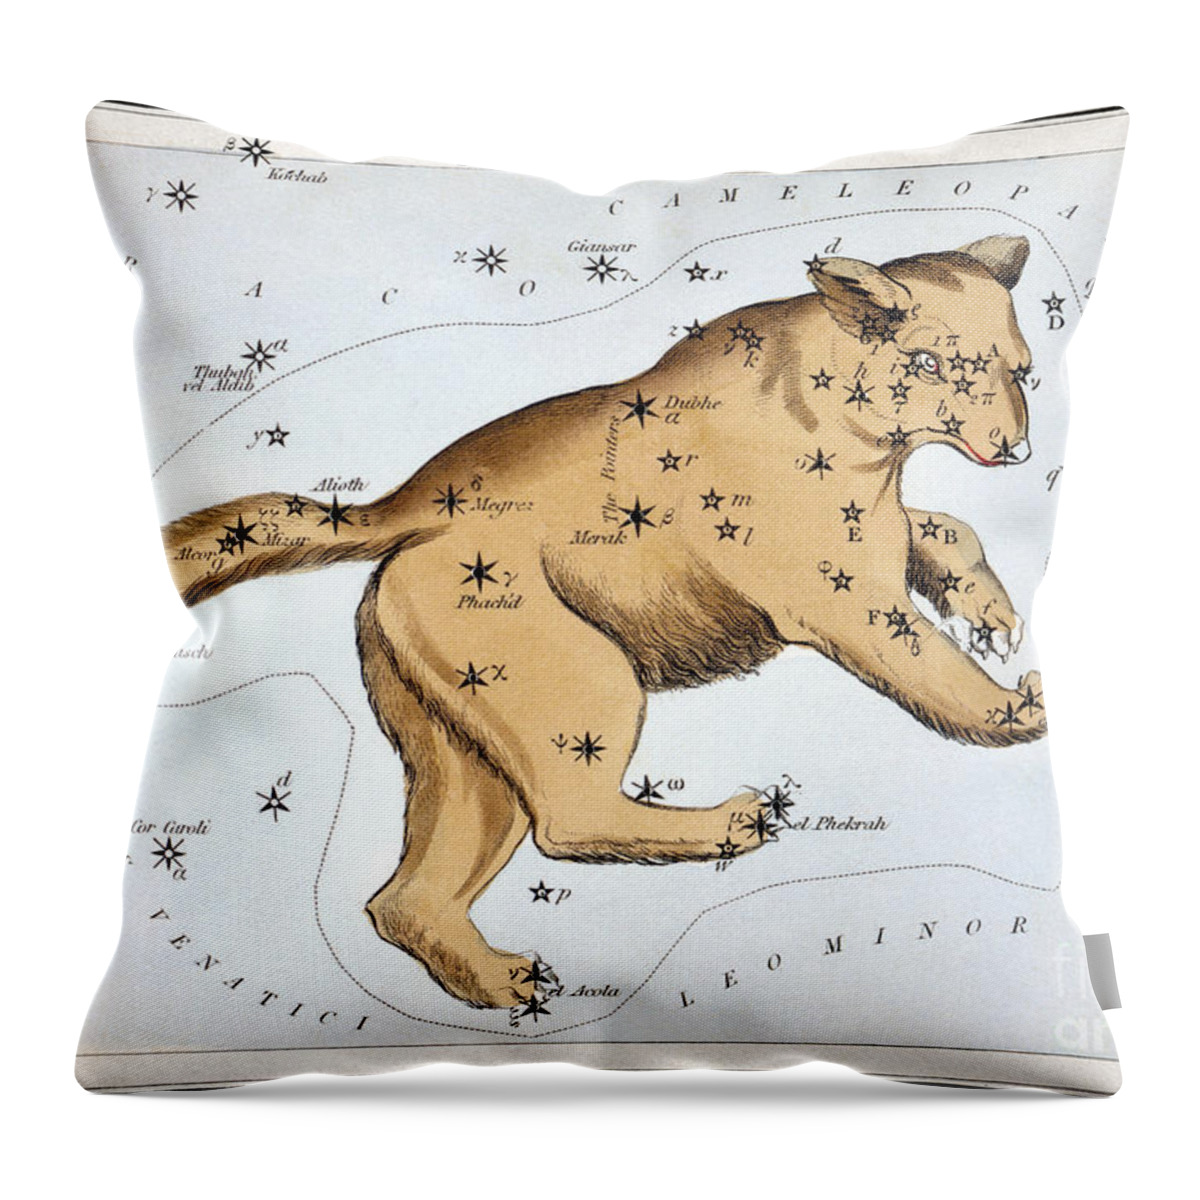 1825 Throw Pillow featuring the photograph Astronomy: Ursa Major by Granger